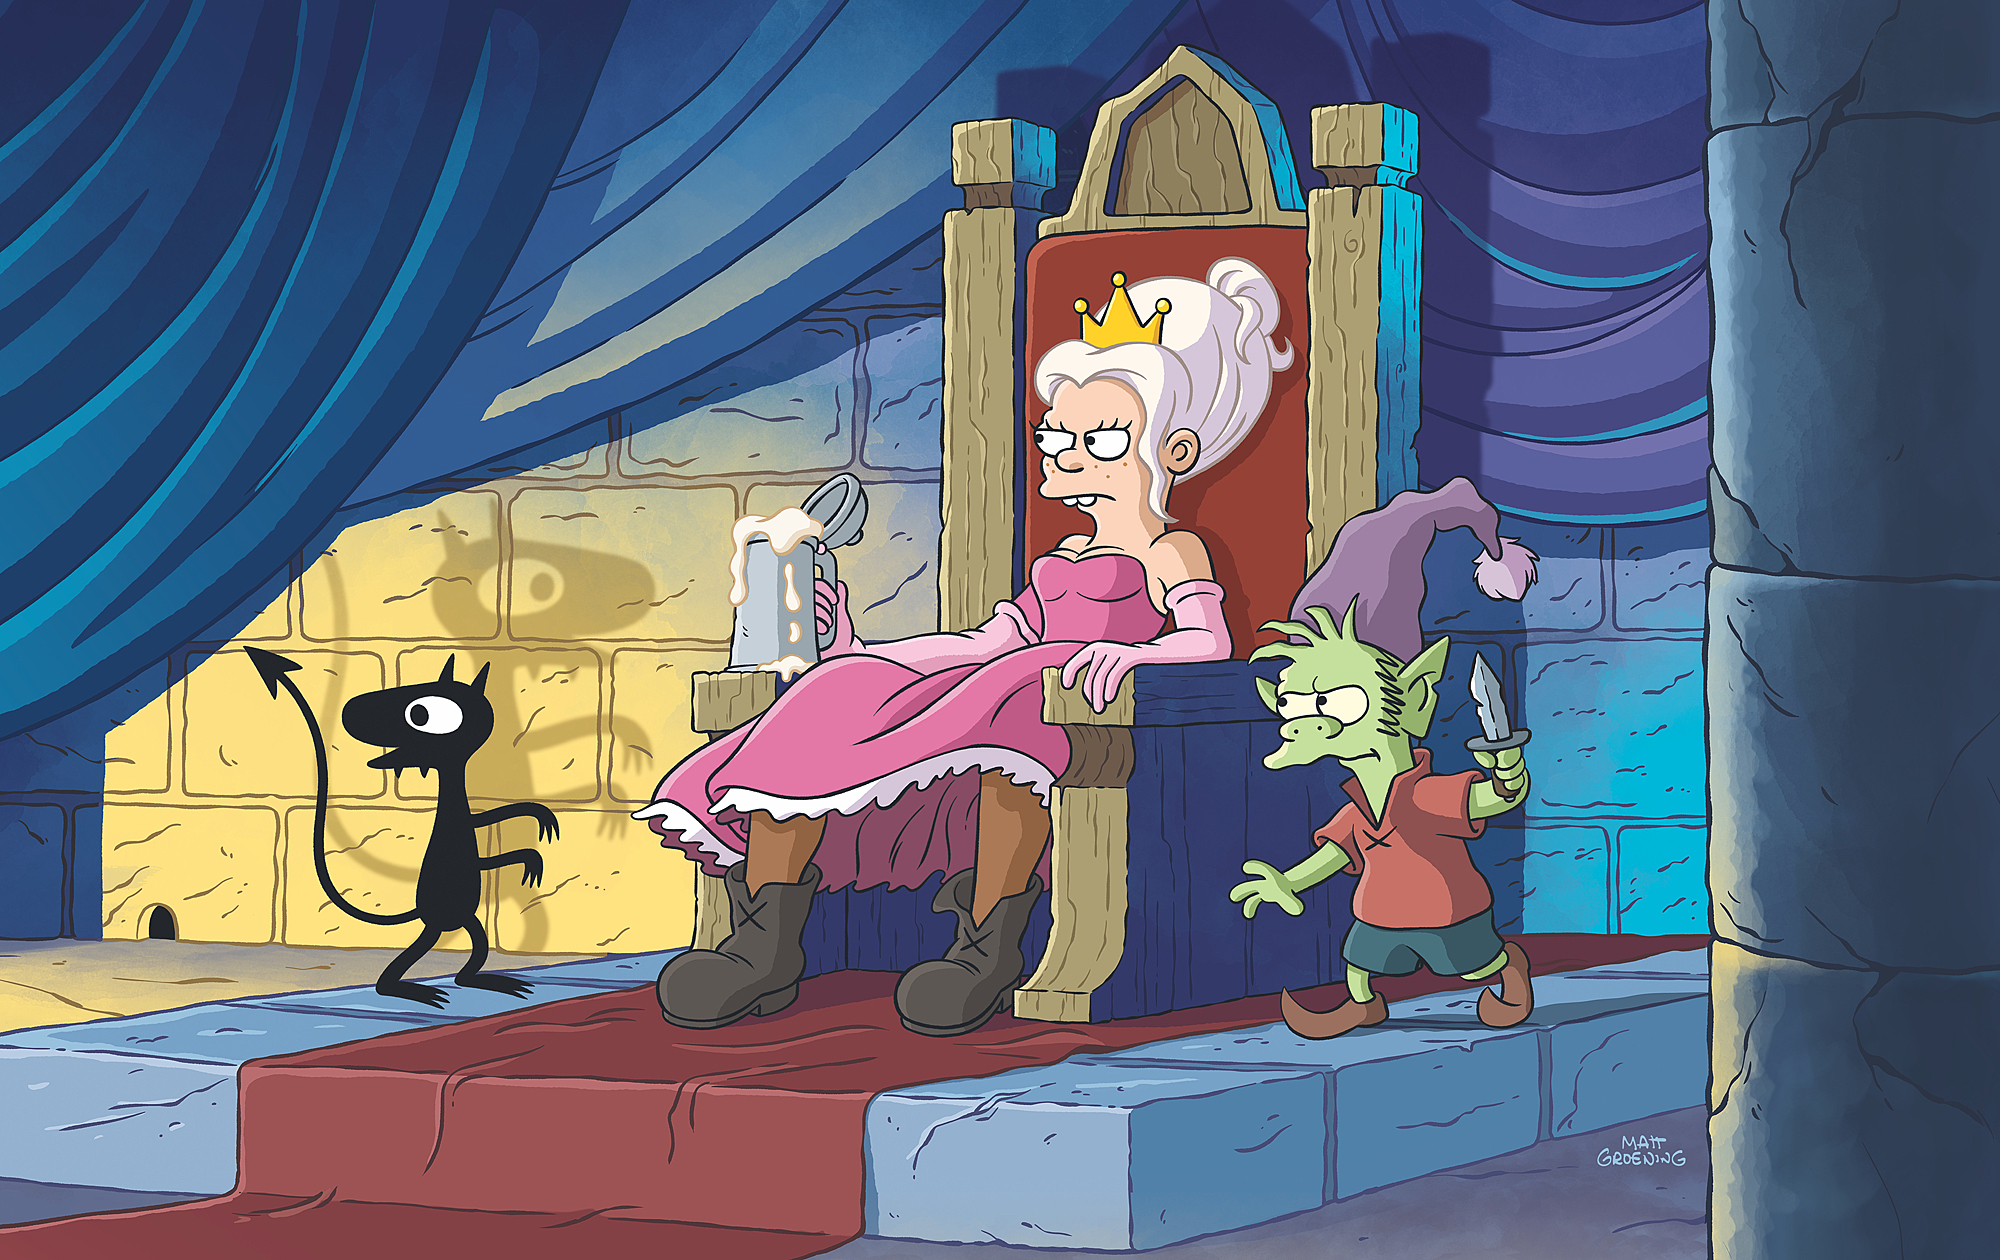 Matt Groening’s New Series “Disenchantment” To Premiere on Netflix